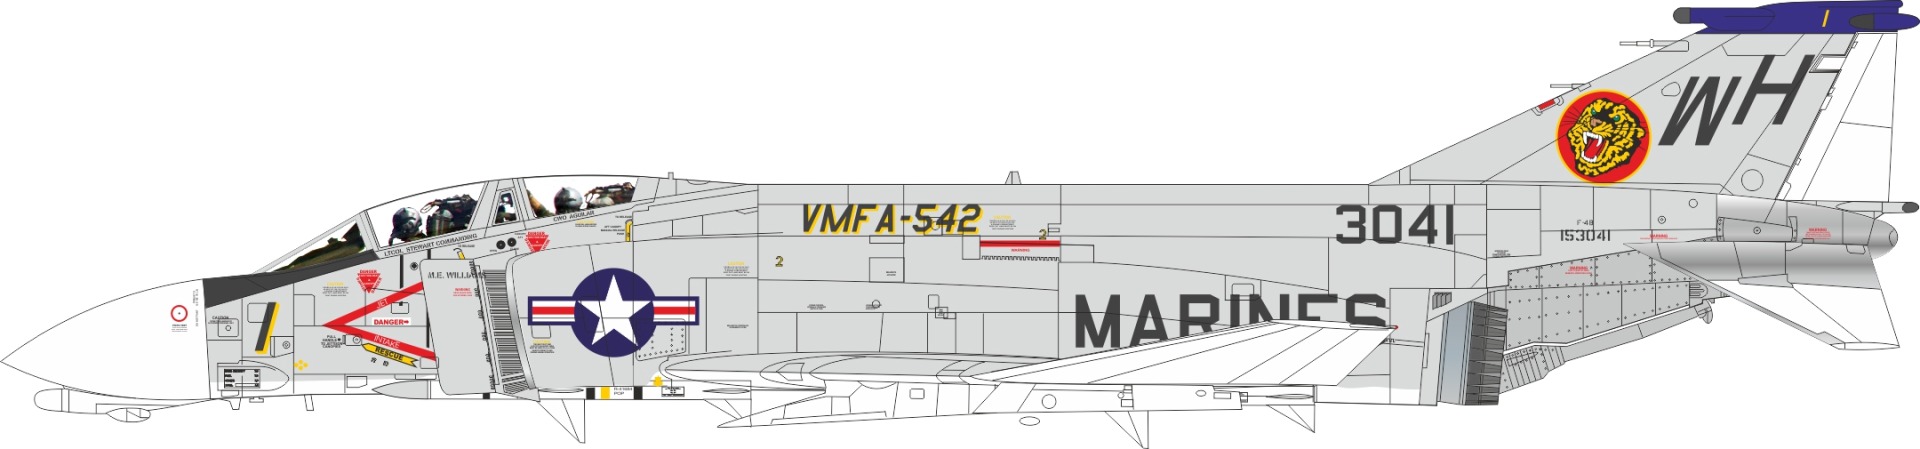 UR4816  декали  F-4B Phantom-II VMFA-542, no stencils & insignia  (1:48)